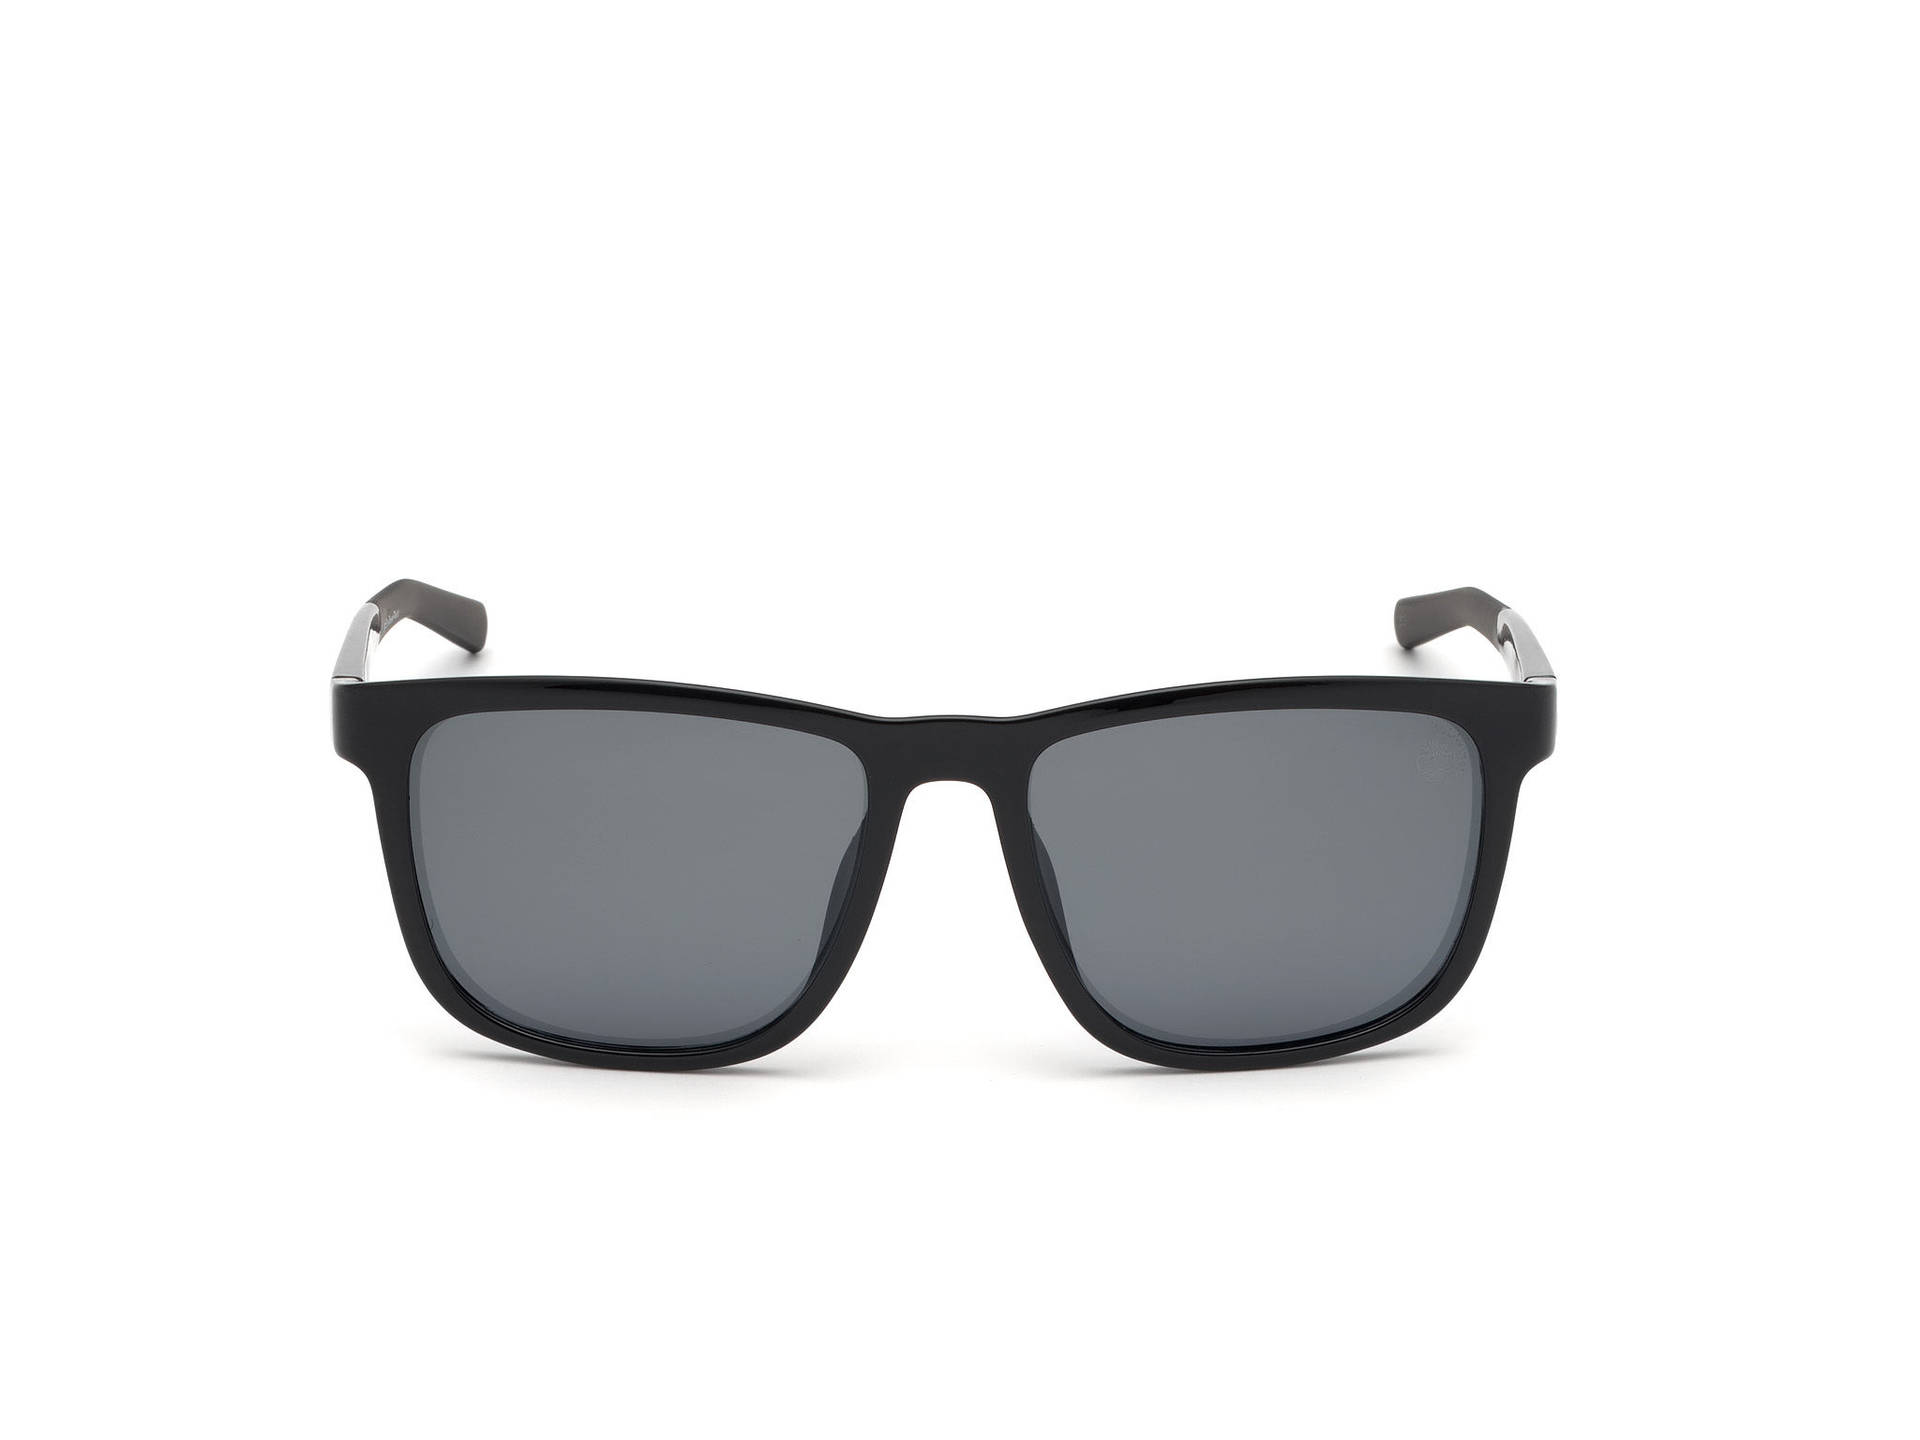 Timberland Sunglasses Gray Lenses Wallpaper